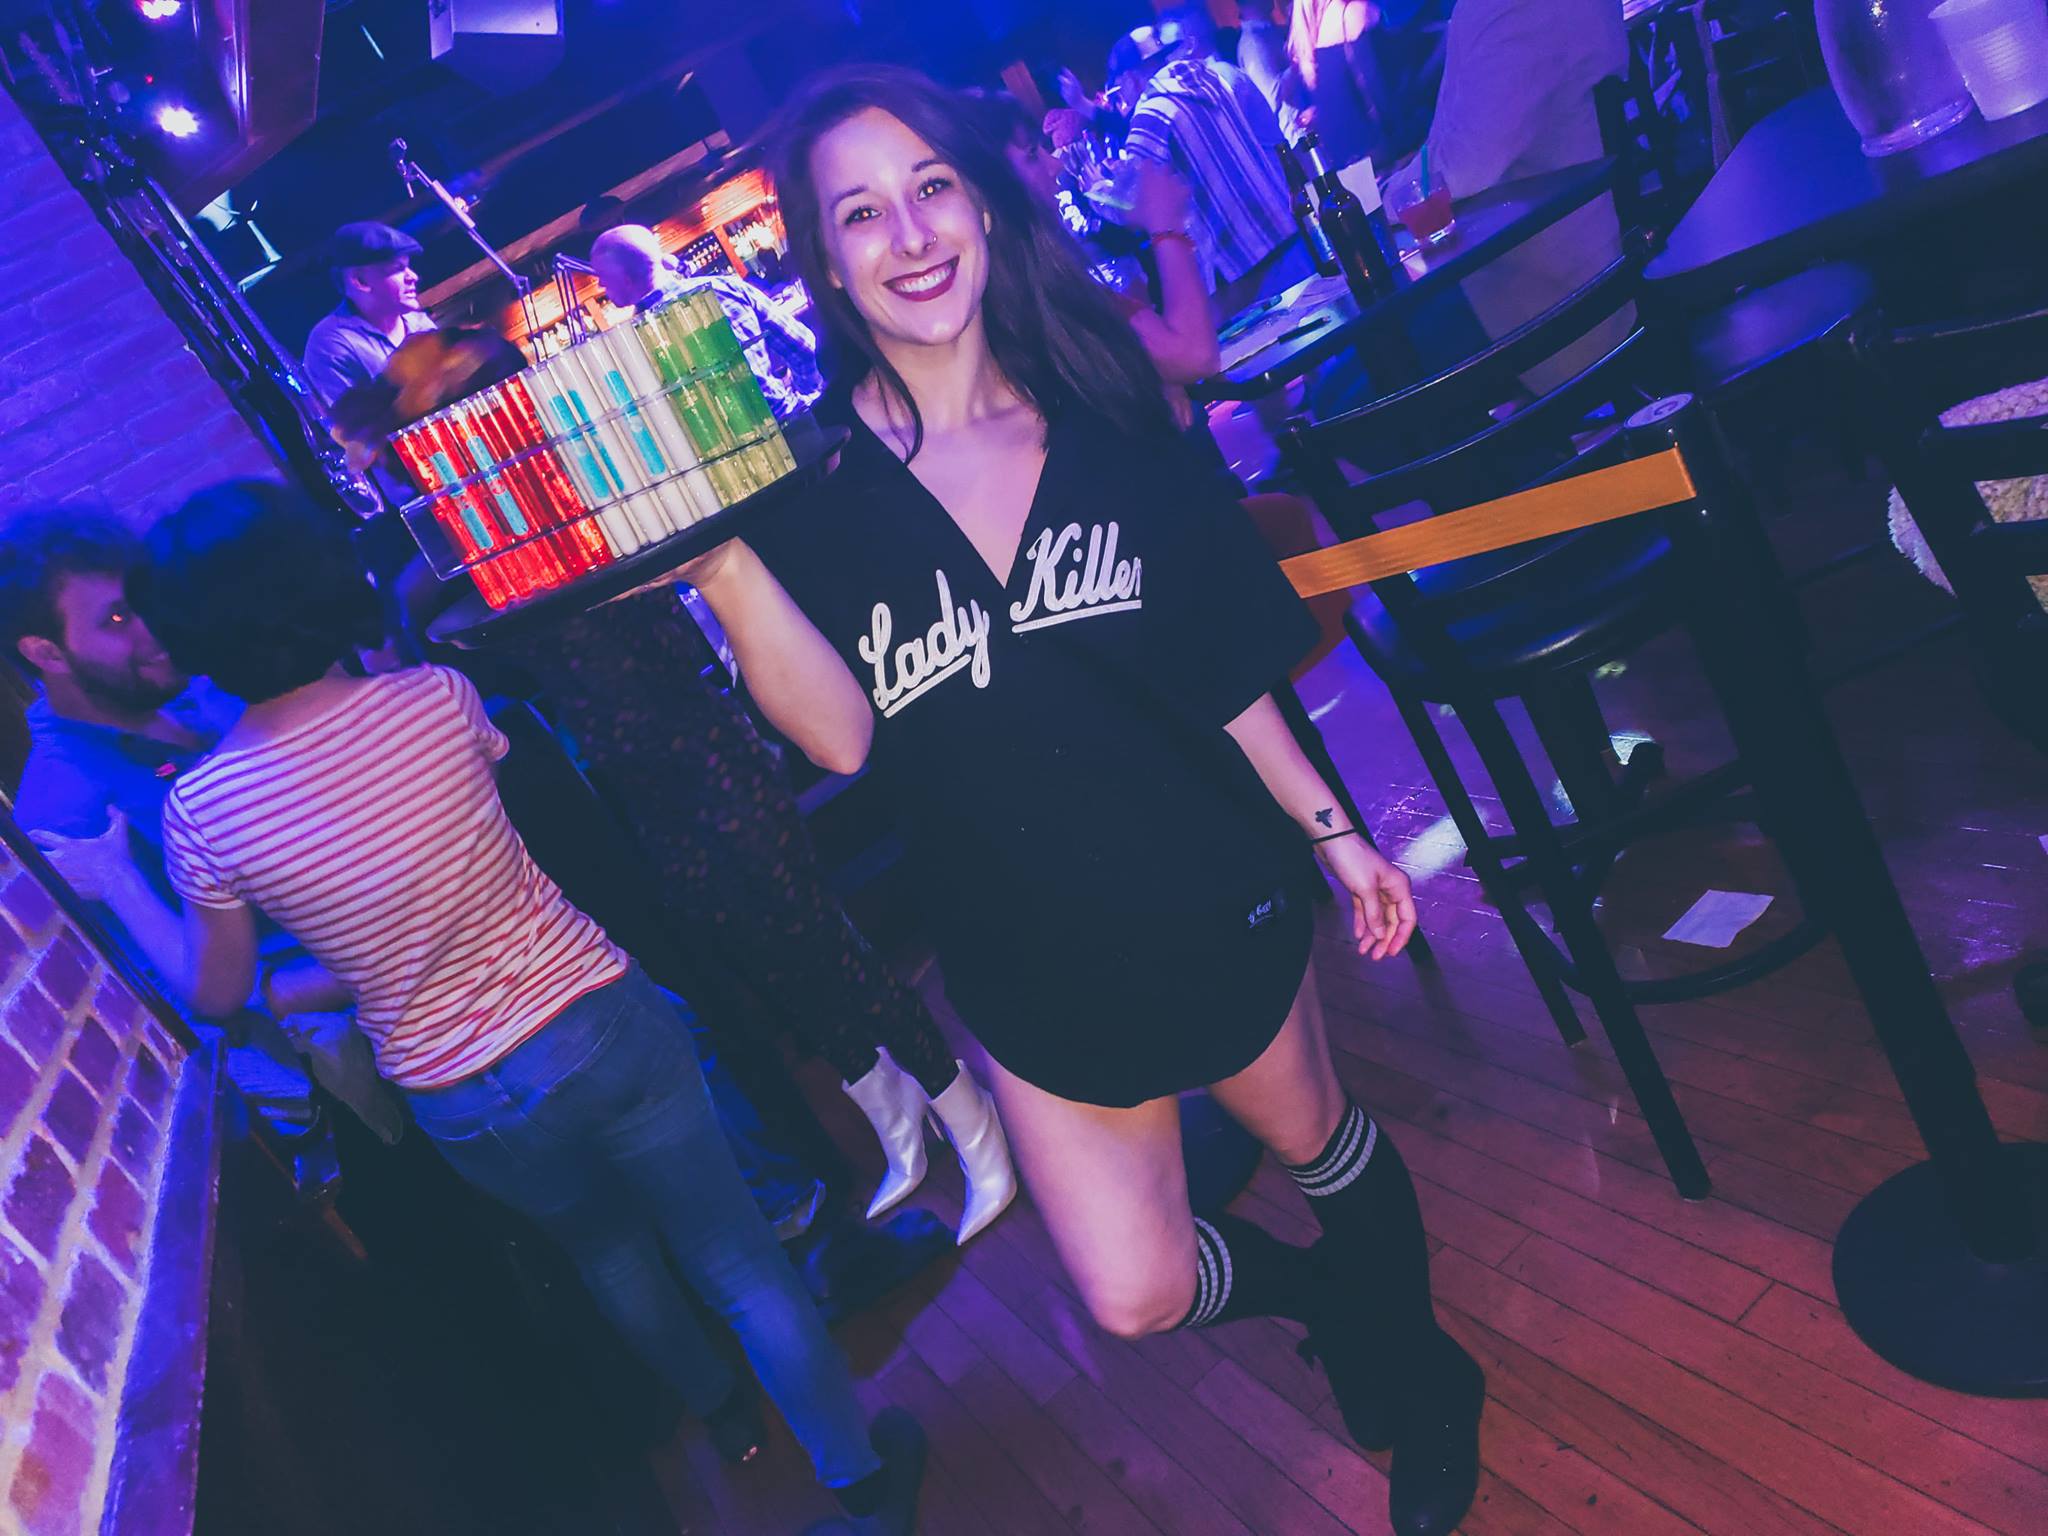 Bachelorette Parties, Clubs in Boston, Boston Nightlife